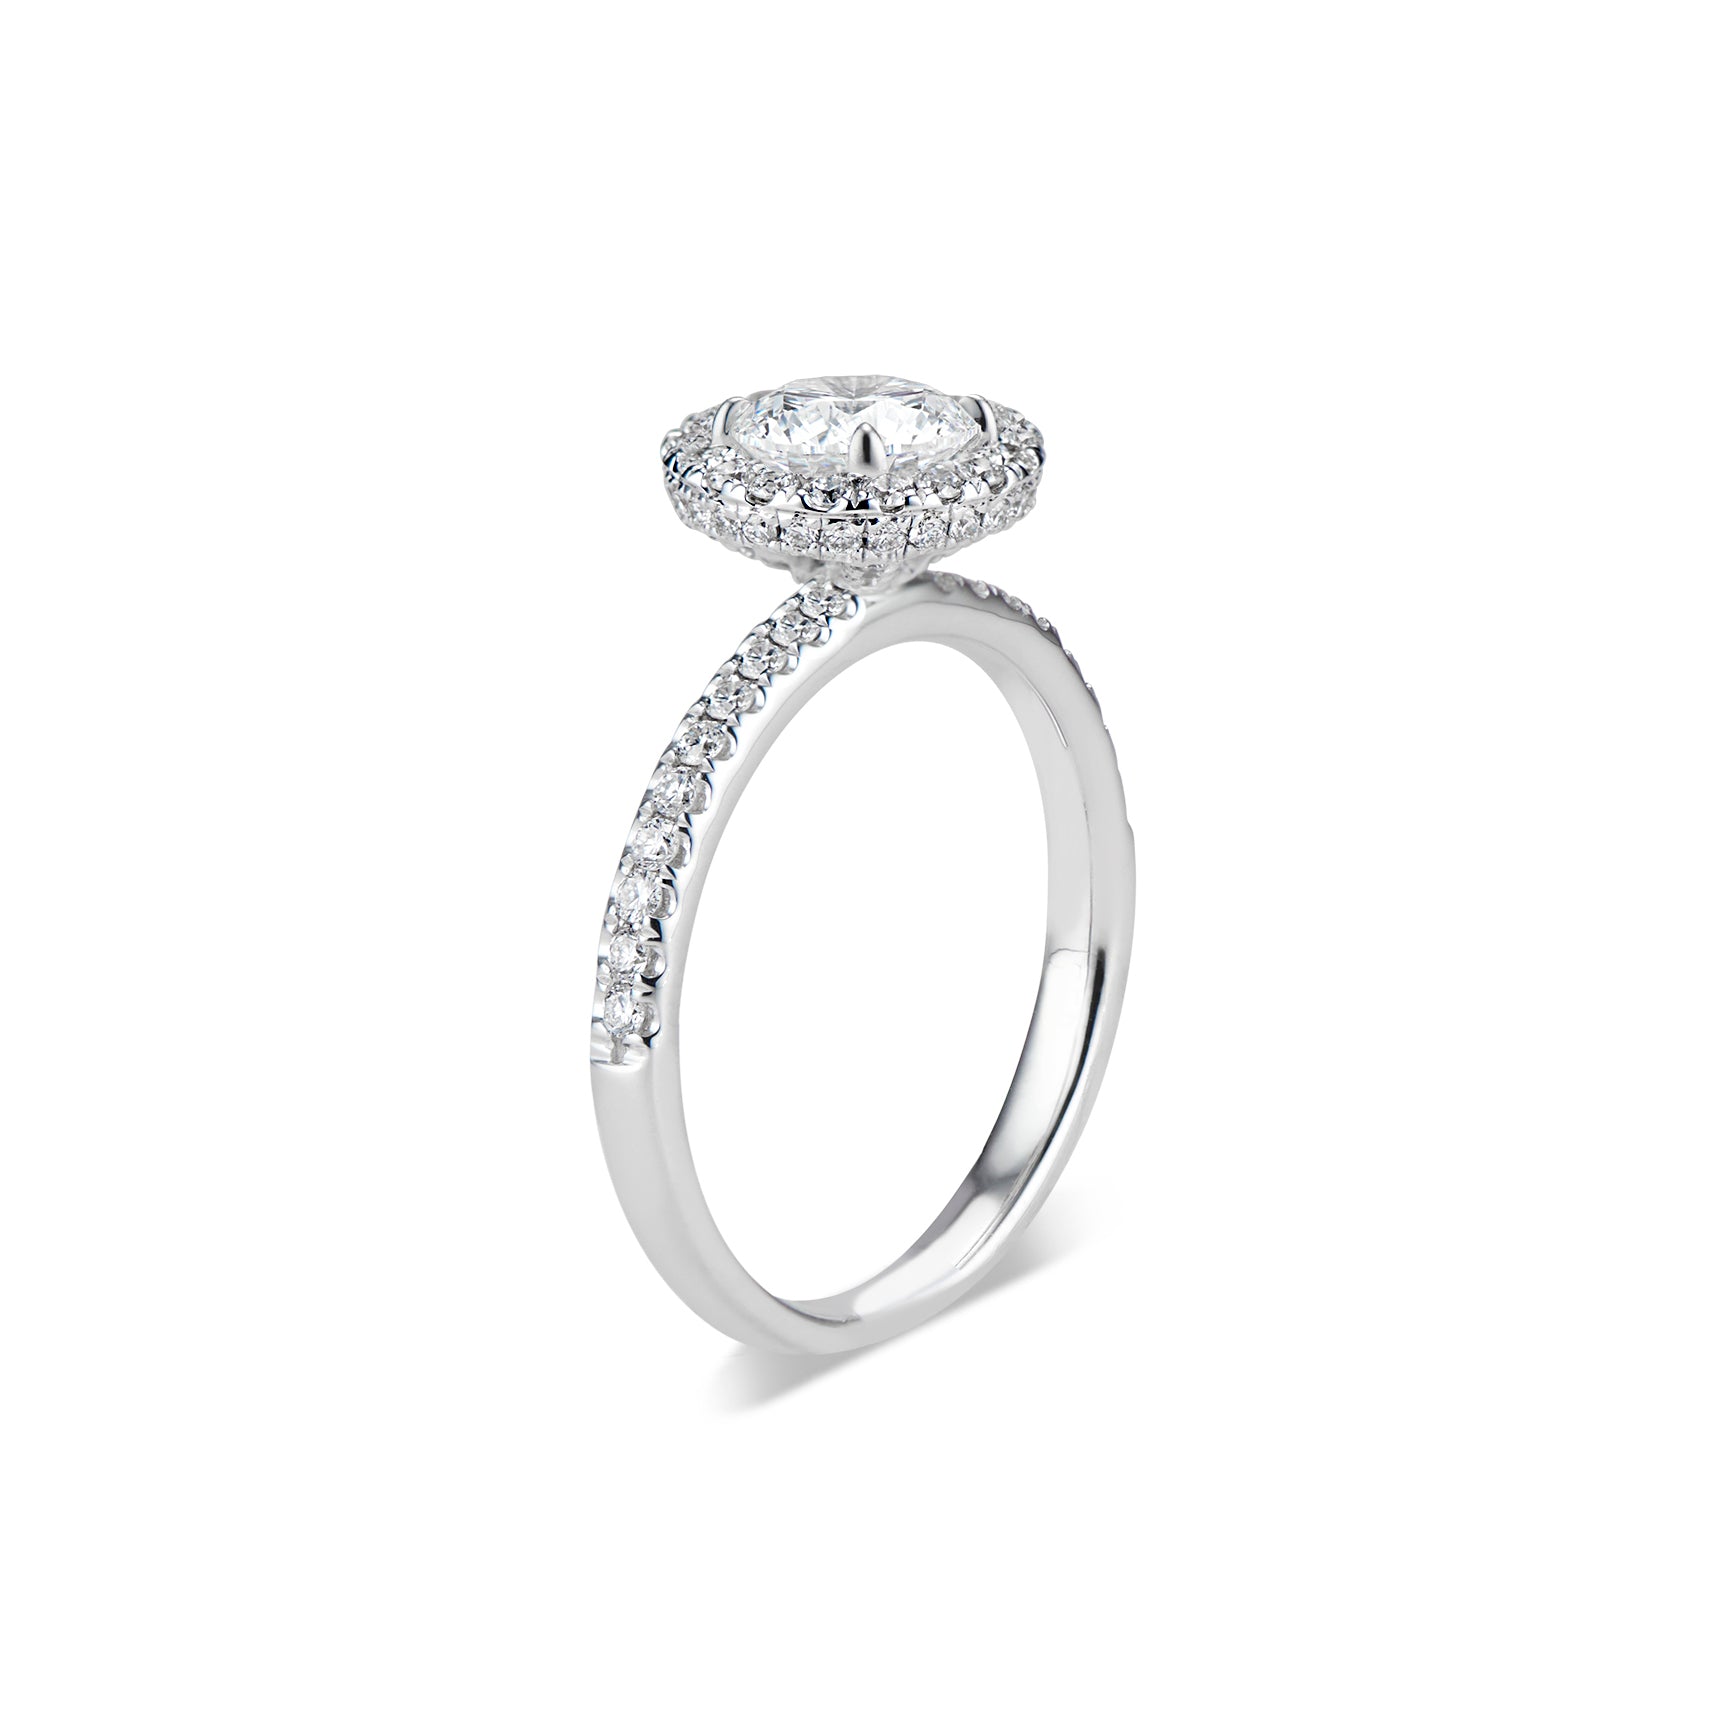 Round Double-Edge Halo Diamond Engagement Ring  -18 K weighting 3.65  - 74 round diamonds totaling 0.44 carats